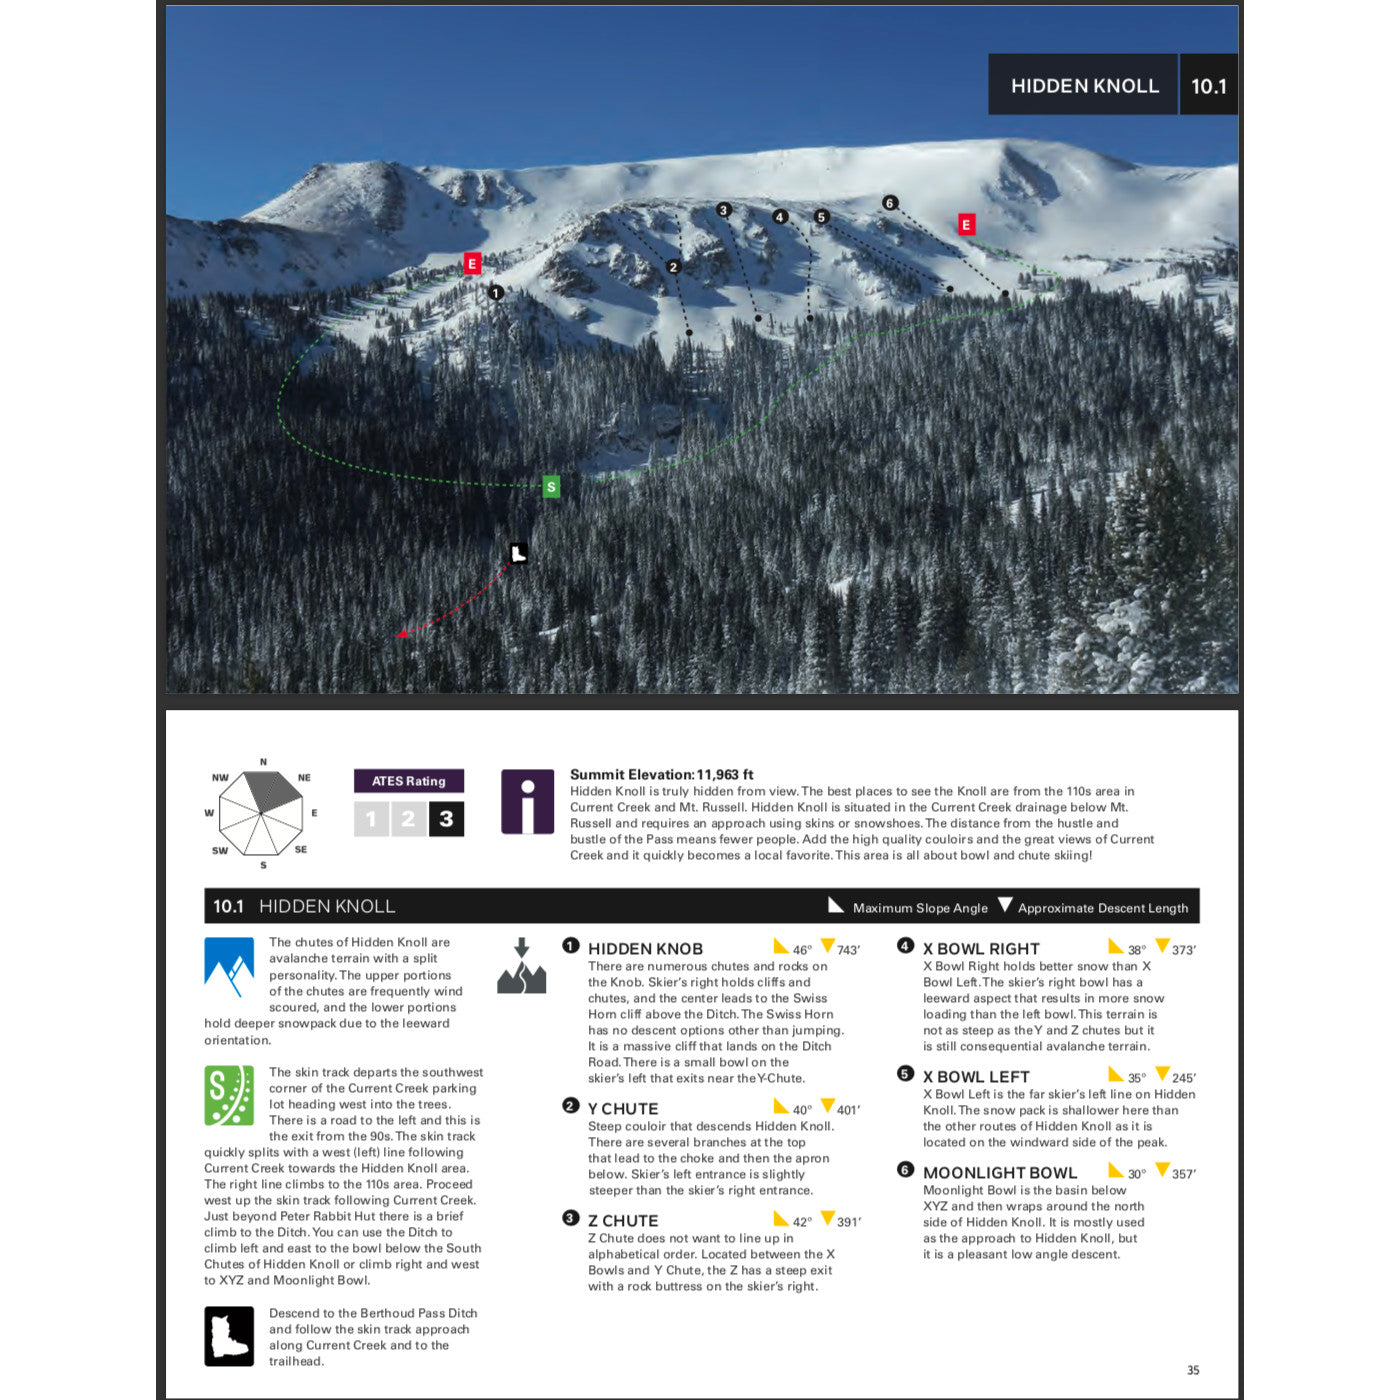 Backcountry Skiing Berthoud Pass Beacon Guidebooks | Backcountry Books